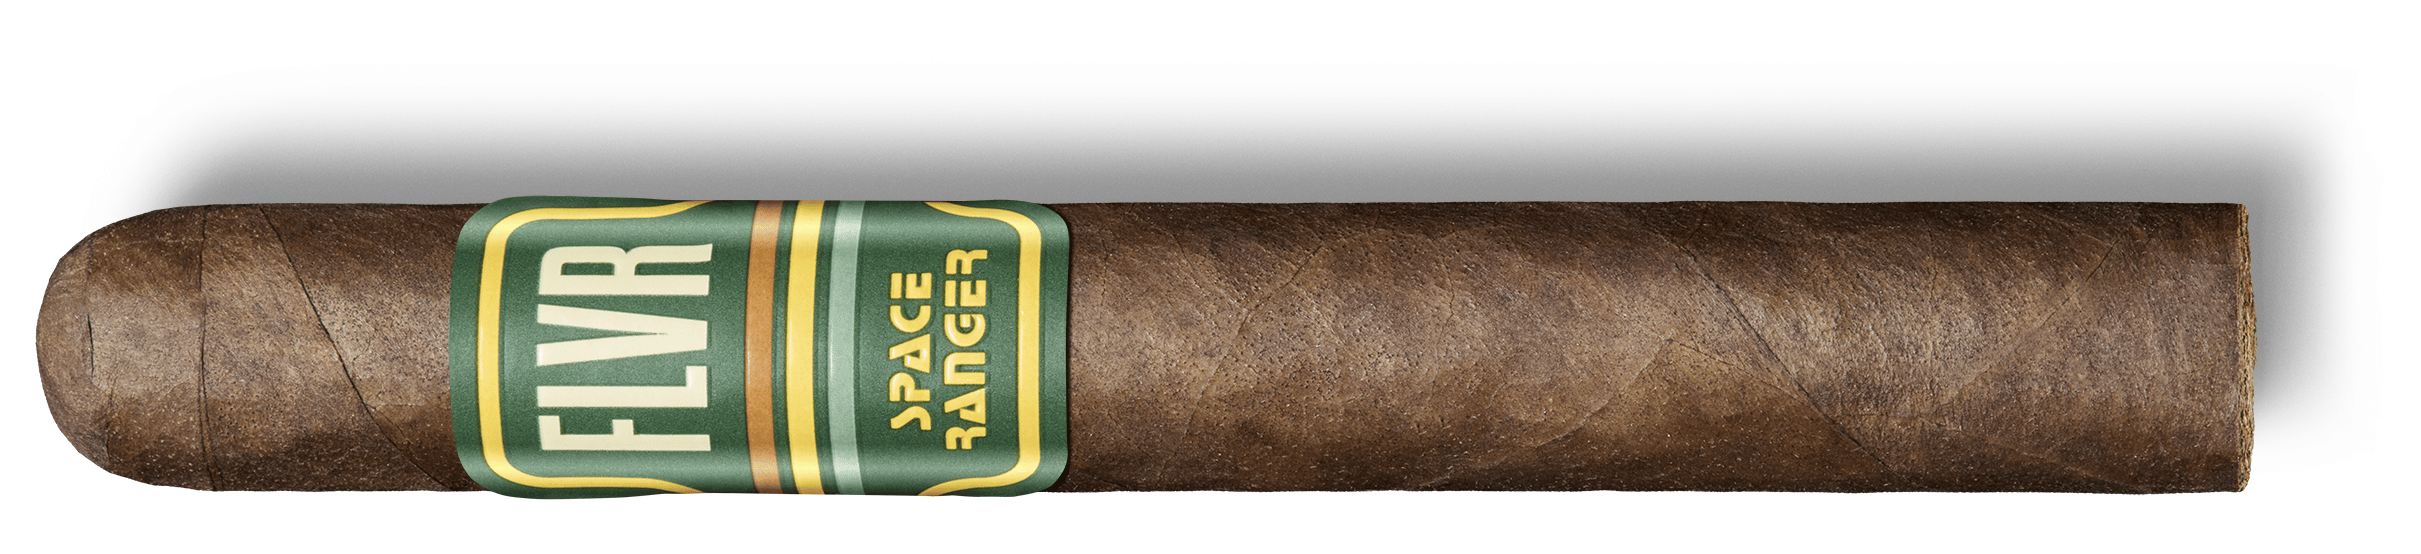 STG Announces FLVR, New Flavored Line of Cigars - Cigar News